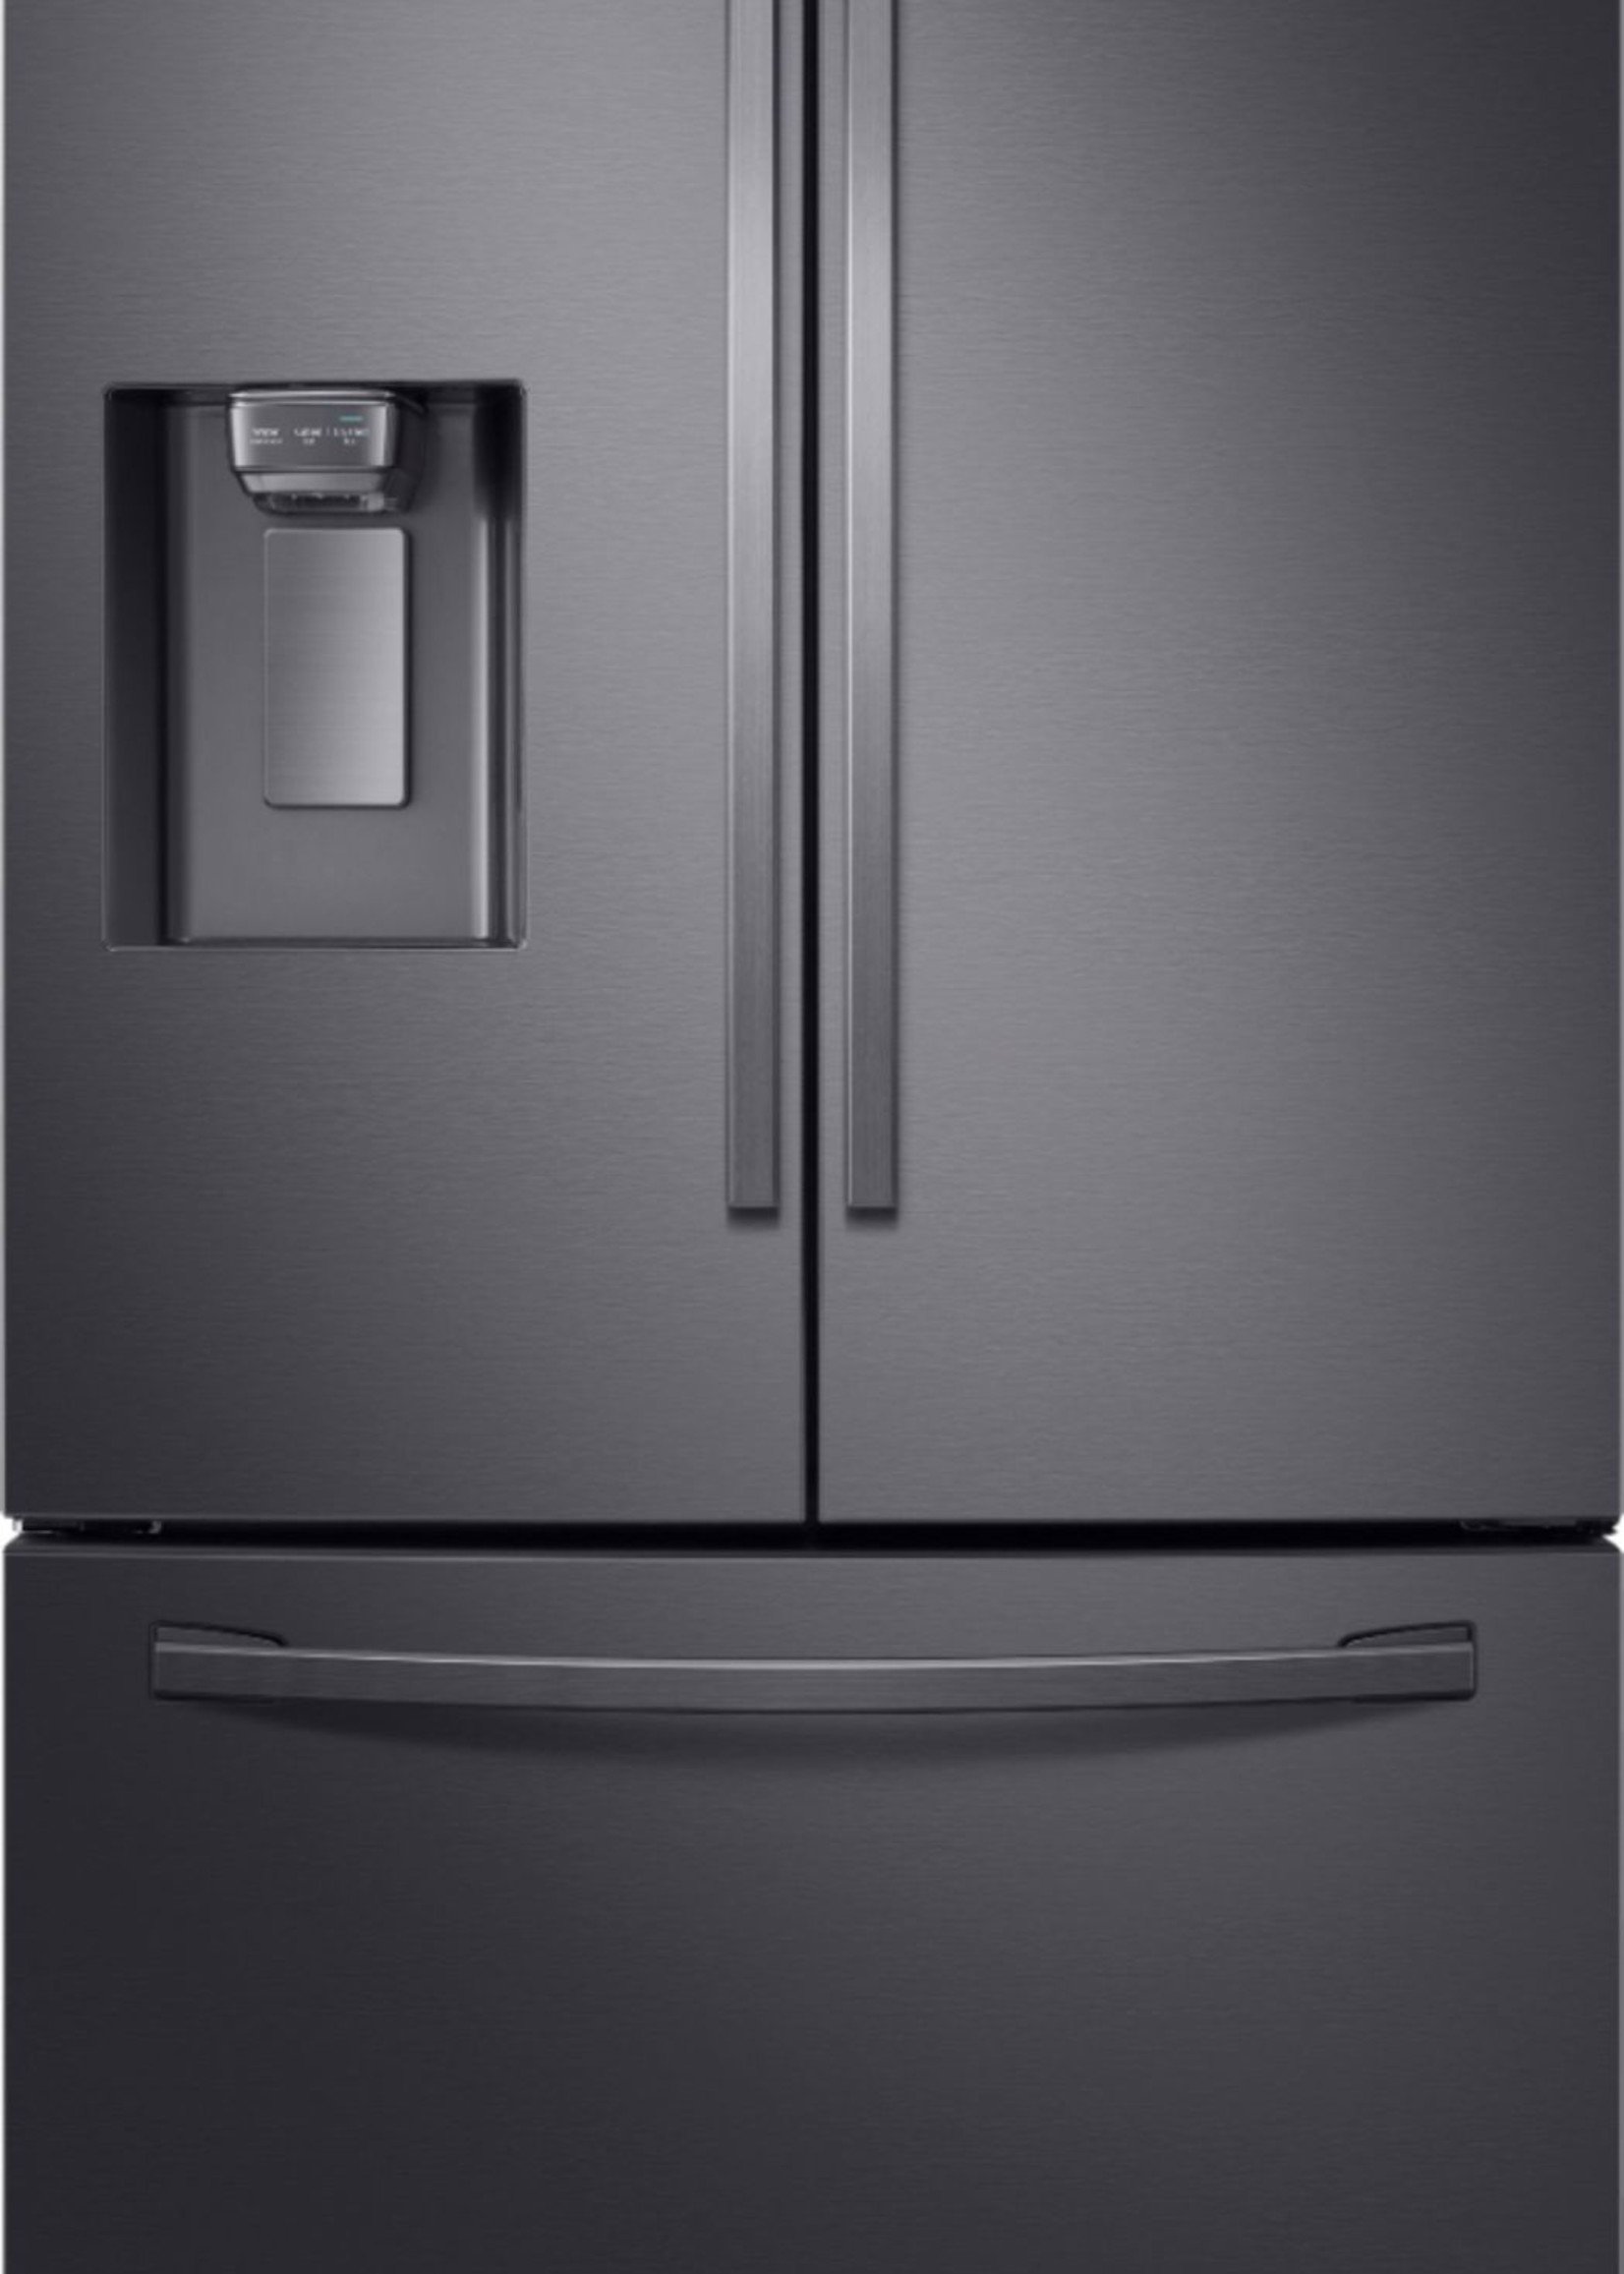 Samsung *Samsung  RF28R6201SG  28-cu ft French Door Refrigerator with Ice Maker (Fingerprint Resistant Black Stainless Steel) ENERGY STAR